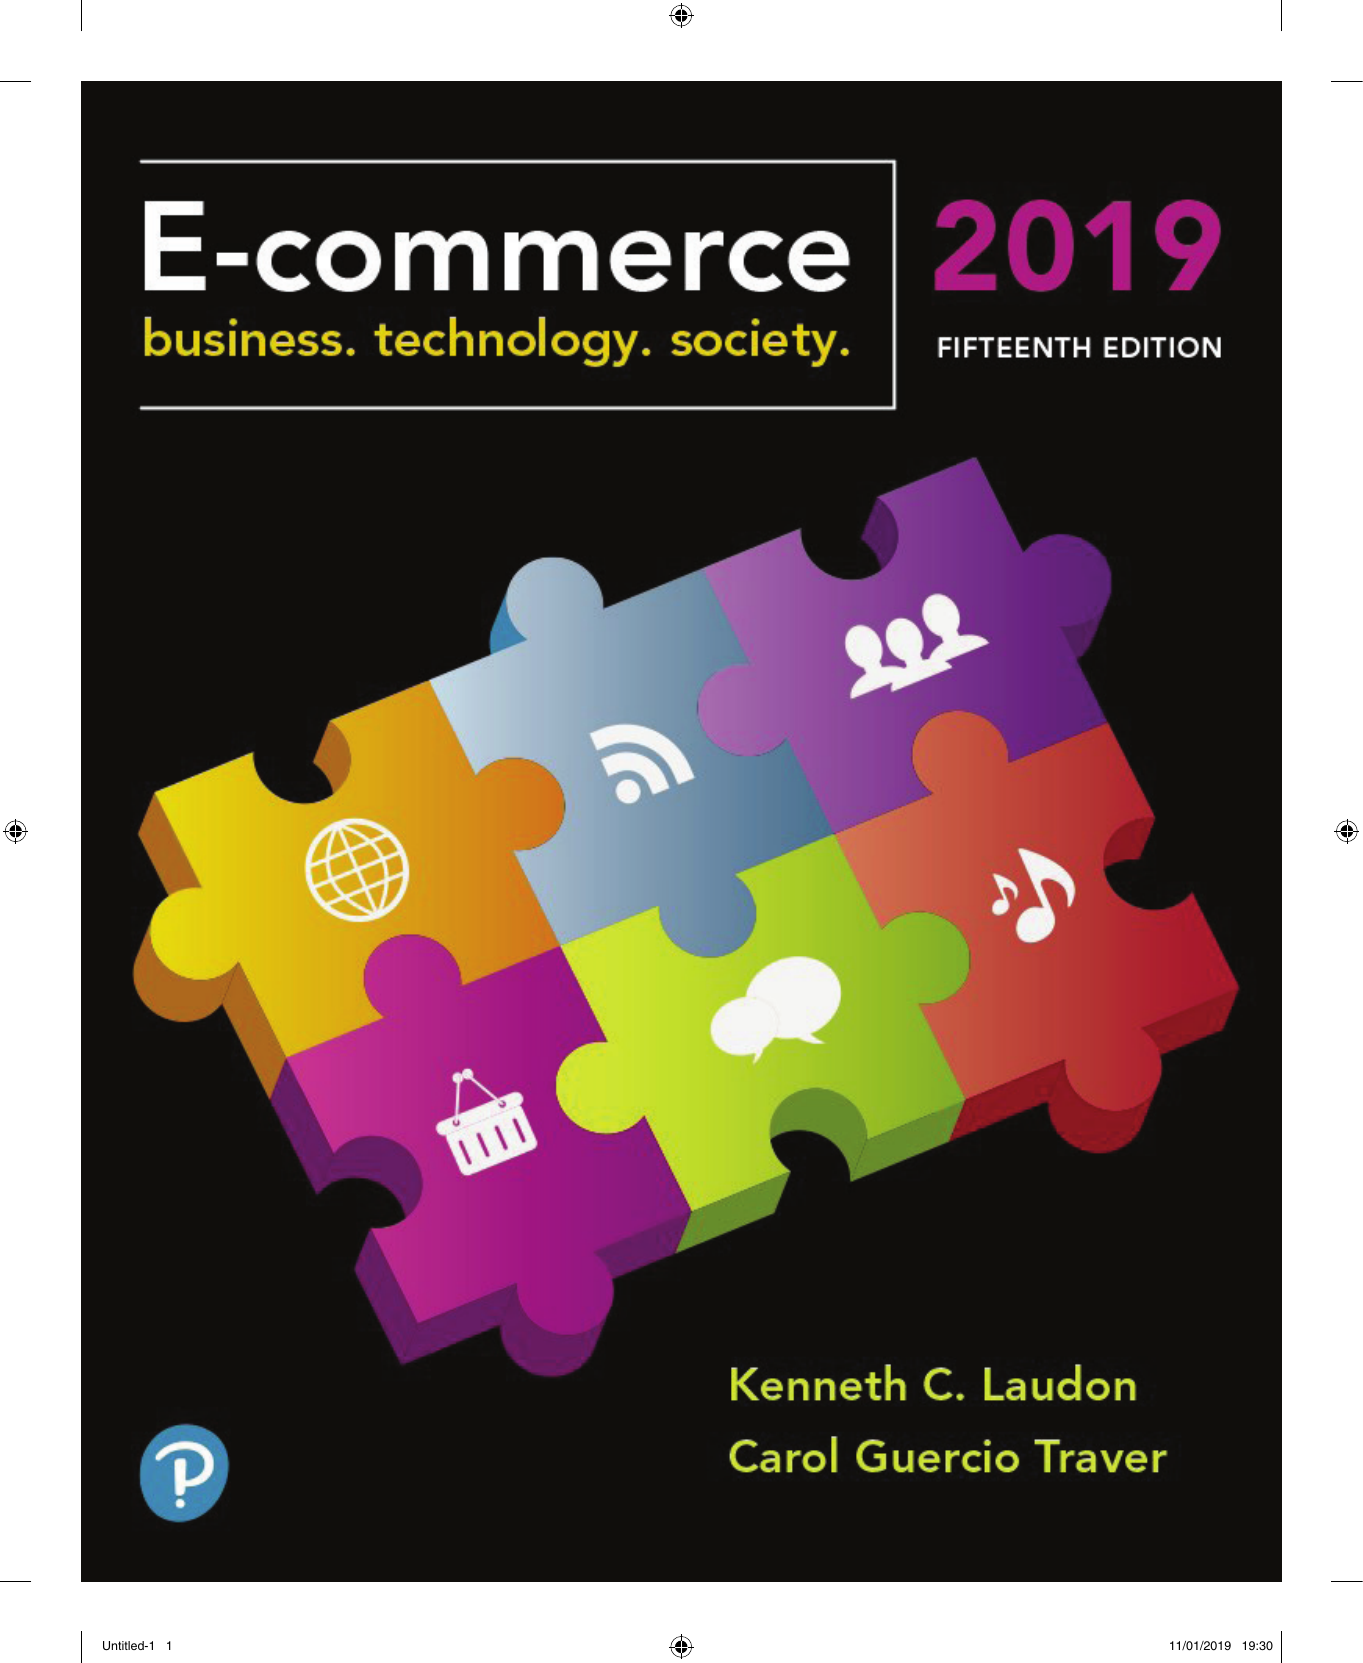 Xxxvi Xxvii 2019 - E-Commerce 2019 Business, Technology and Society, 15e Kenneth C. Laudon,  Carol Guercio Traver (Z-Library)